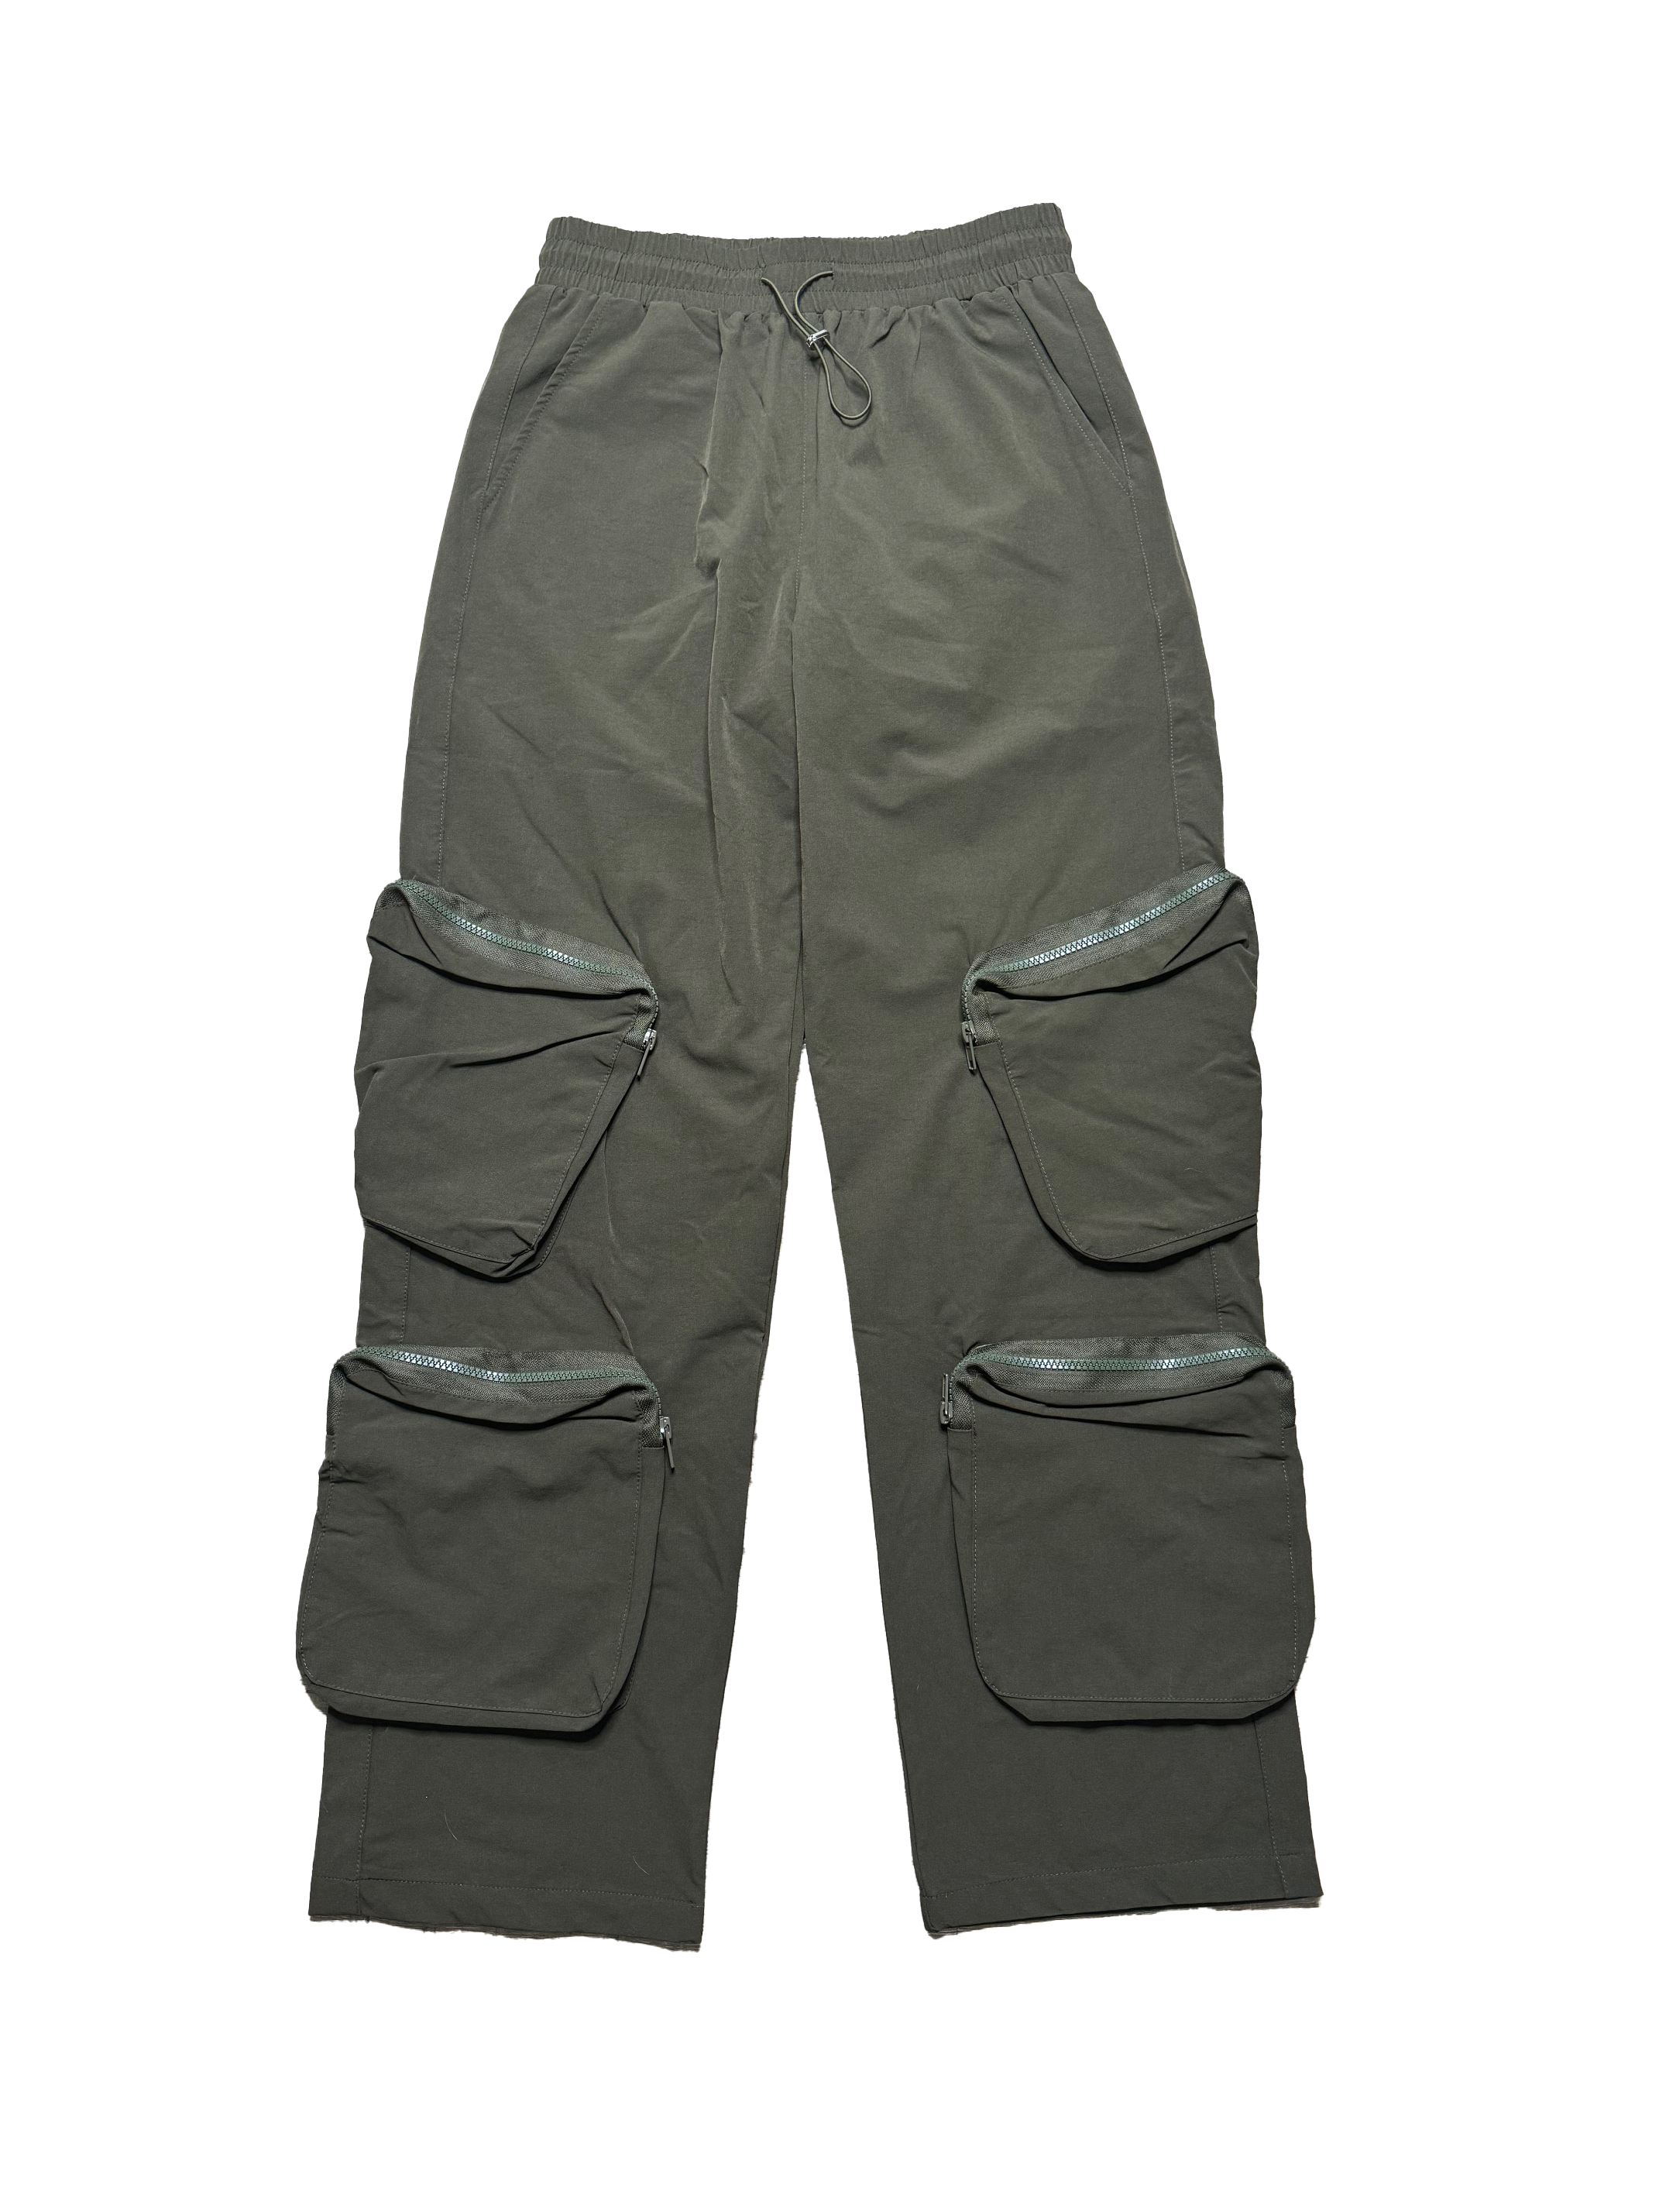 Change Society "Army Green" 4 Pocket Polyester Pants